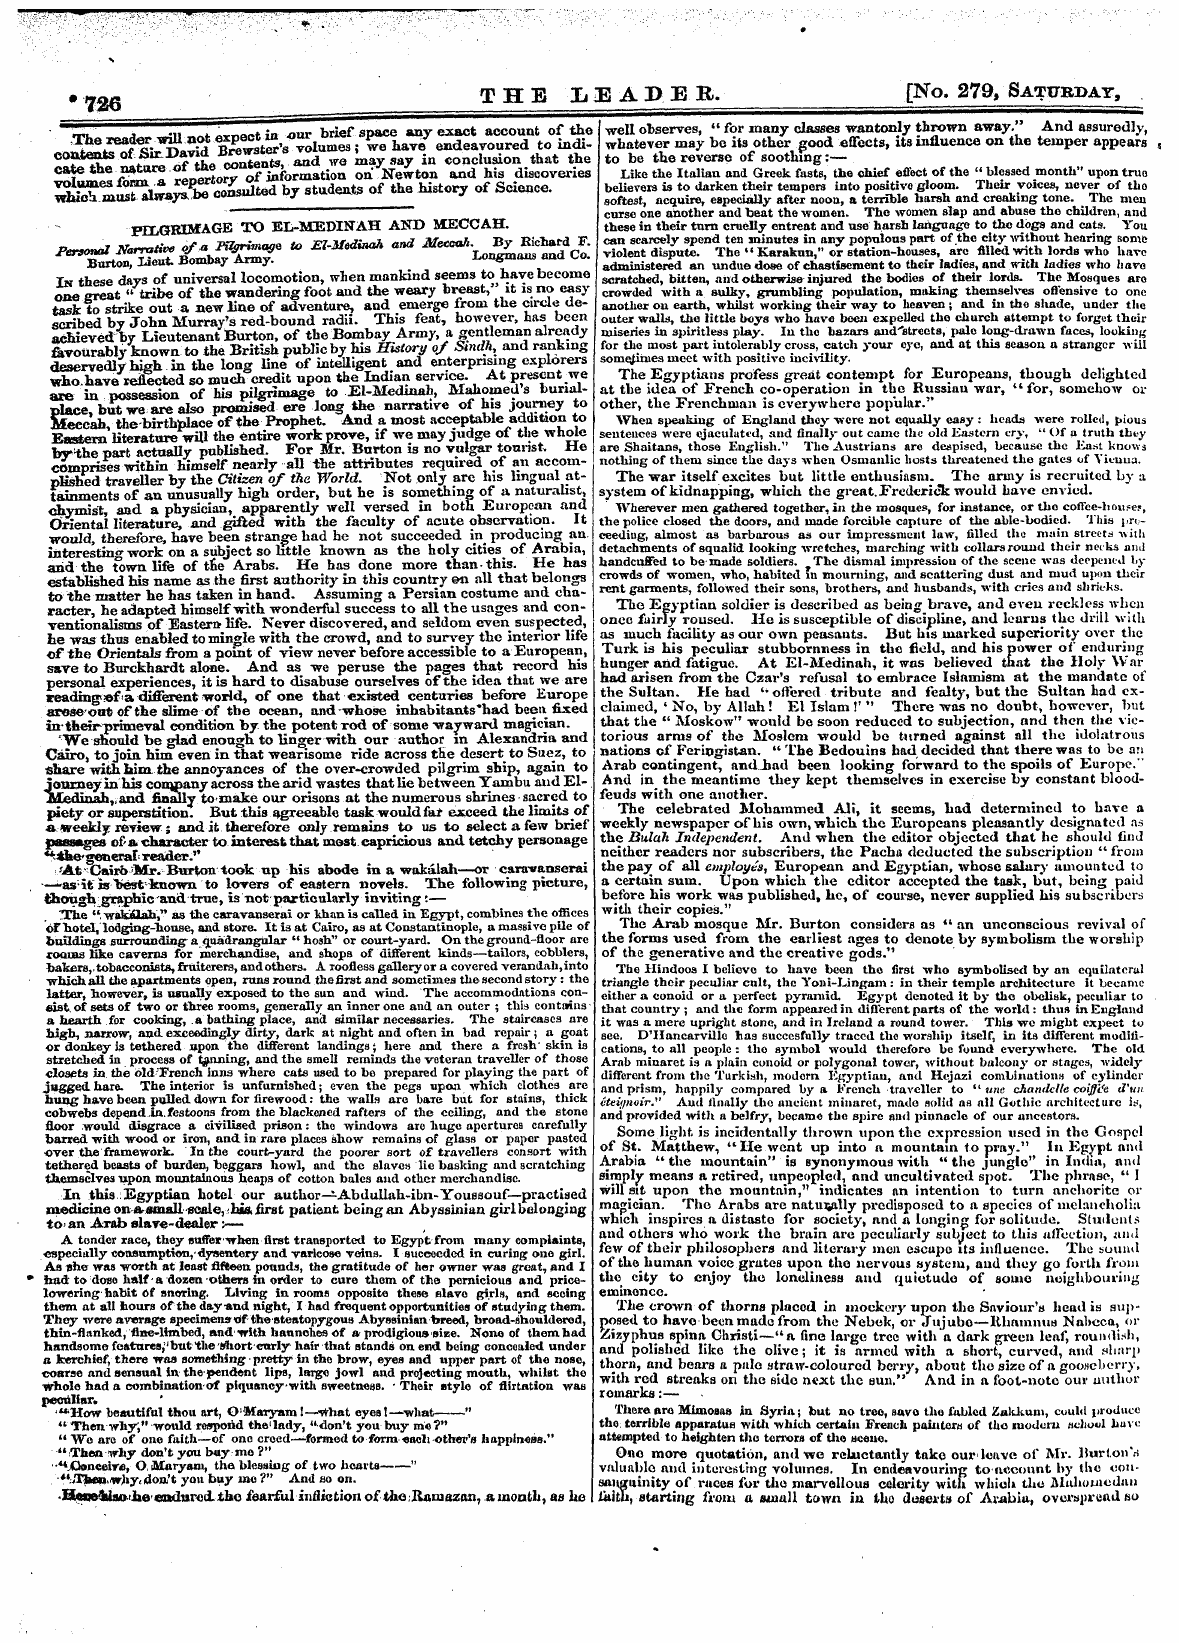 Leader (1850-1860): jS F Y, 1st edition - • 726 Thb Leap.Eb. [No. 279, Satpbday,